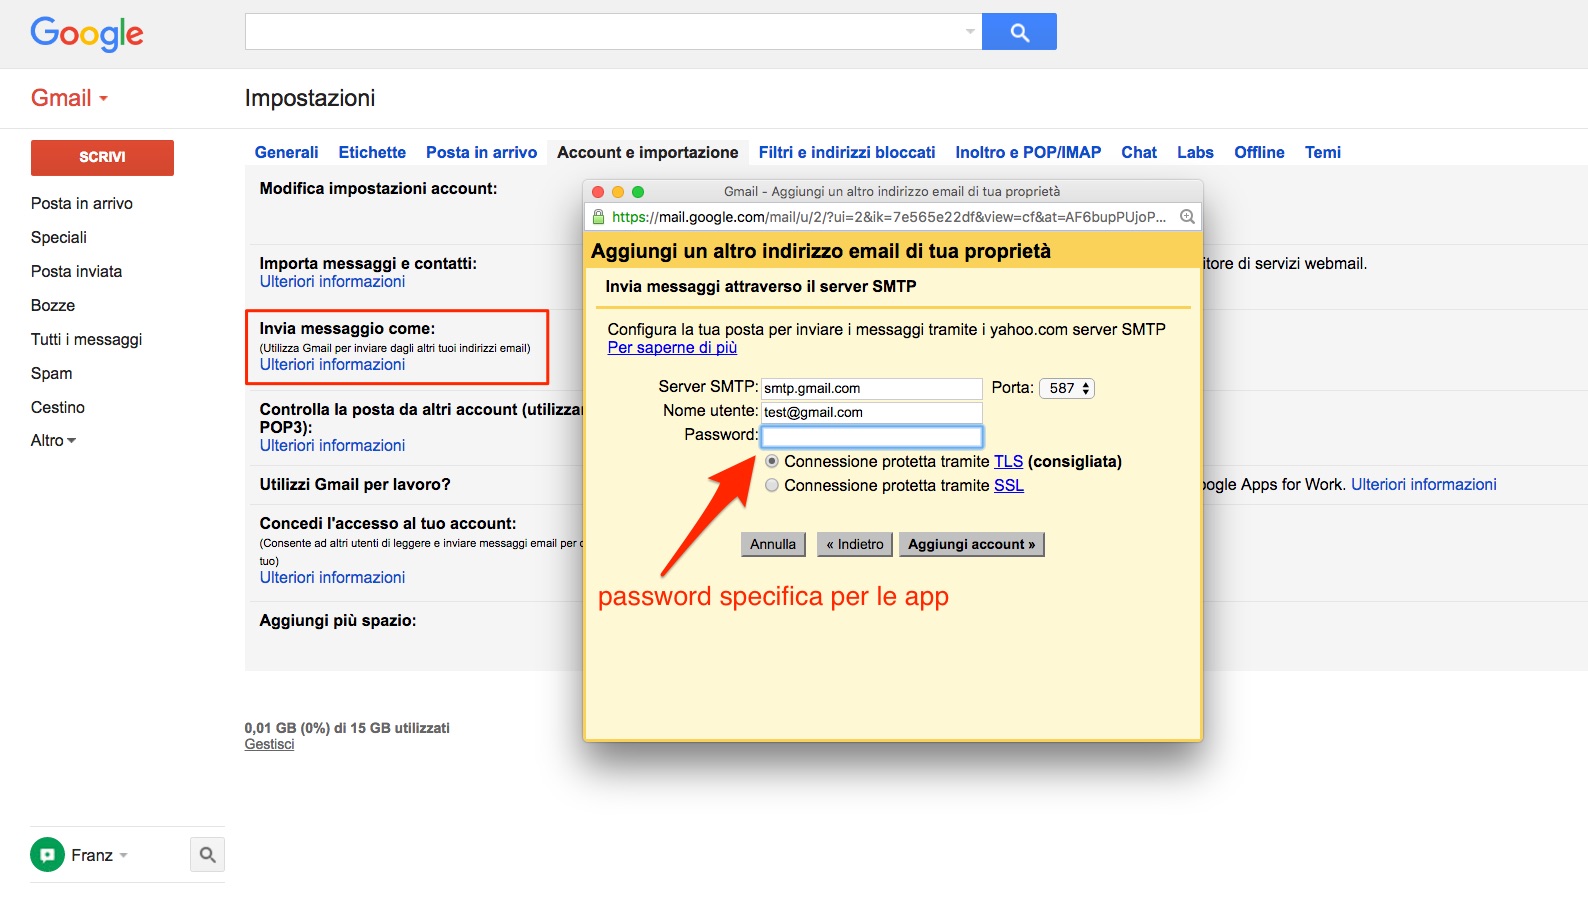 Gmail - Alias e password specifica